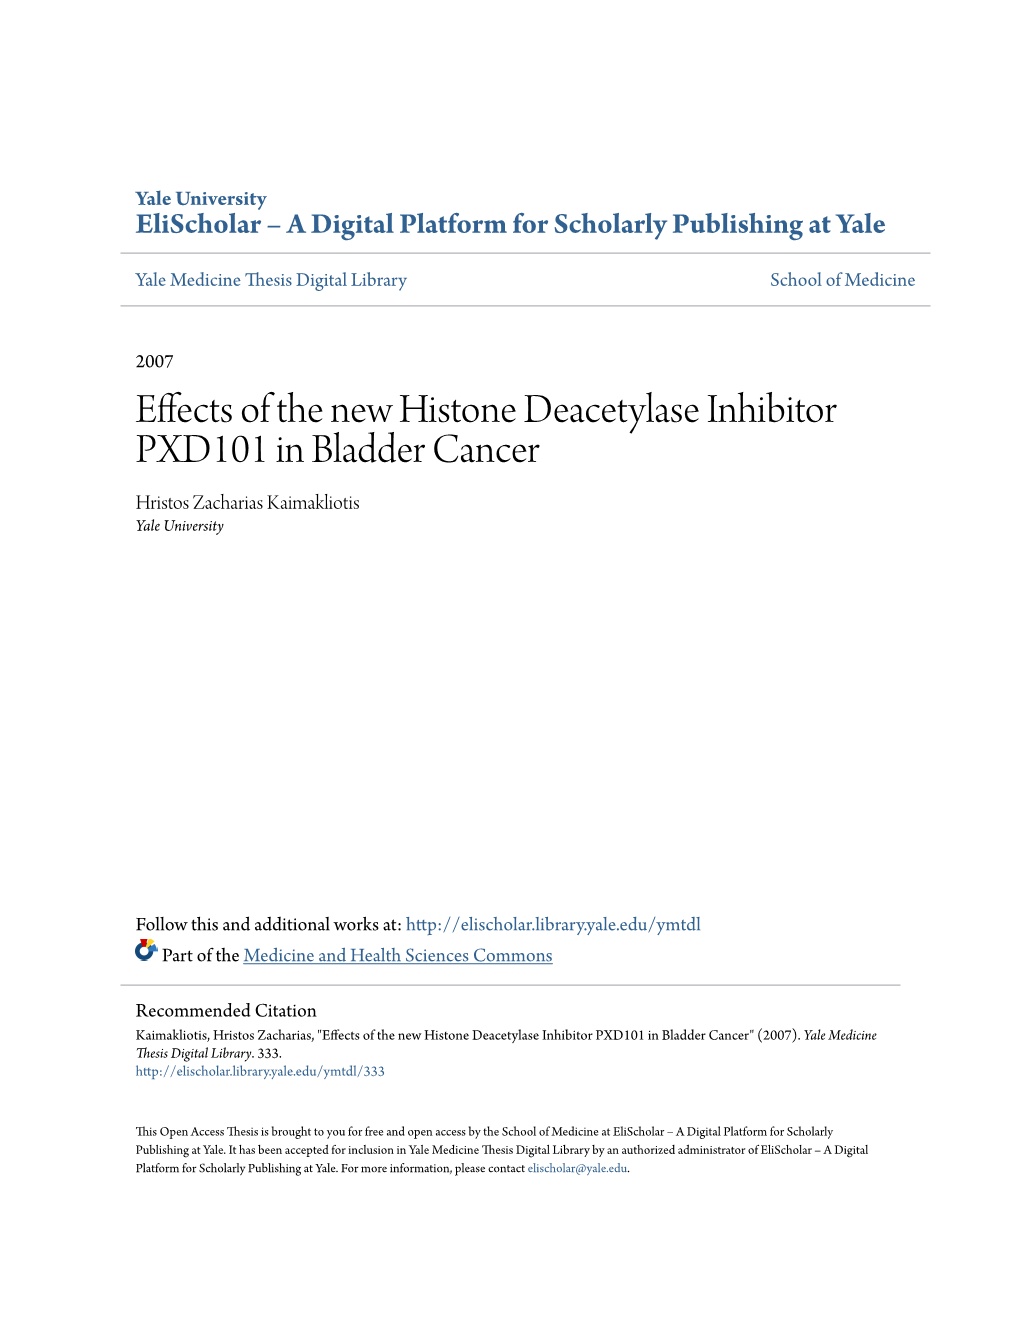 Effects of the New Histone Deacetylase Inhibitor PXD101 in Bladder Cancer Hristos Zacharias Kaimakliotis Yale University